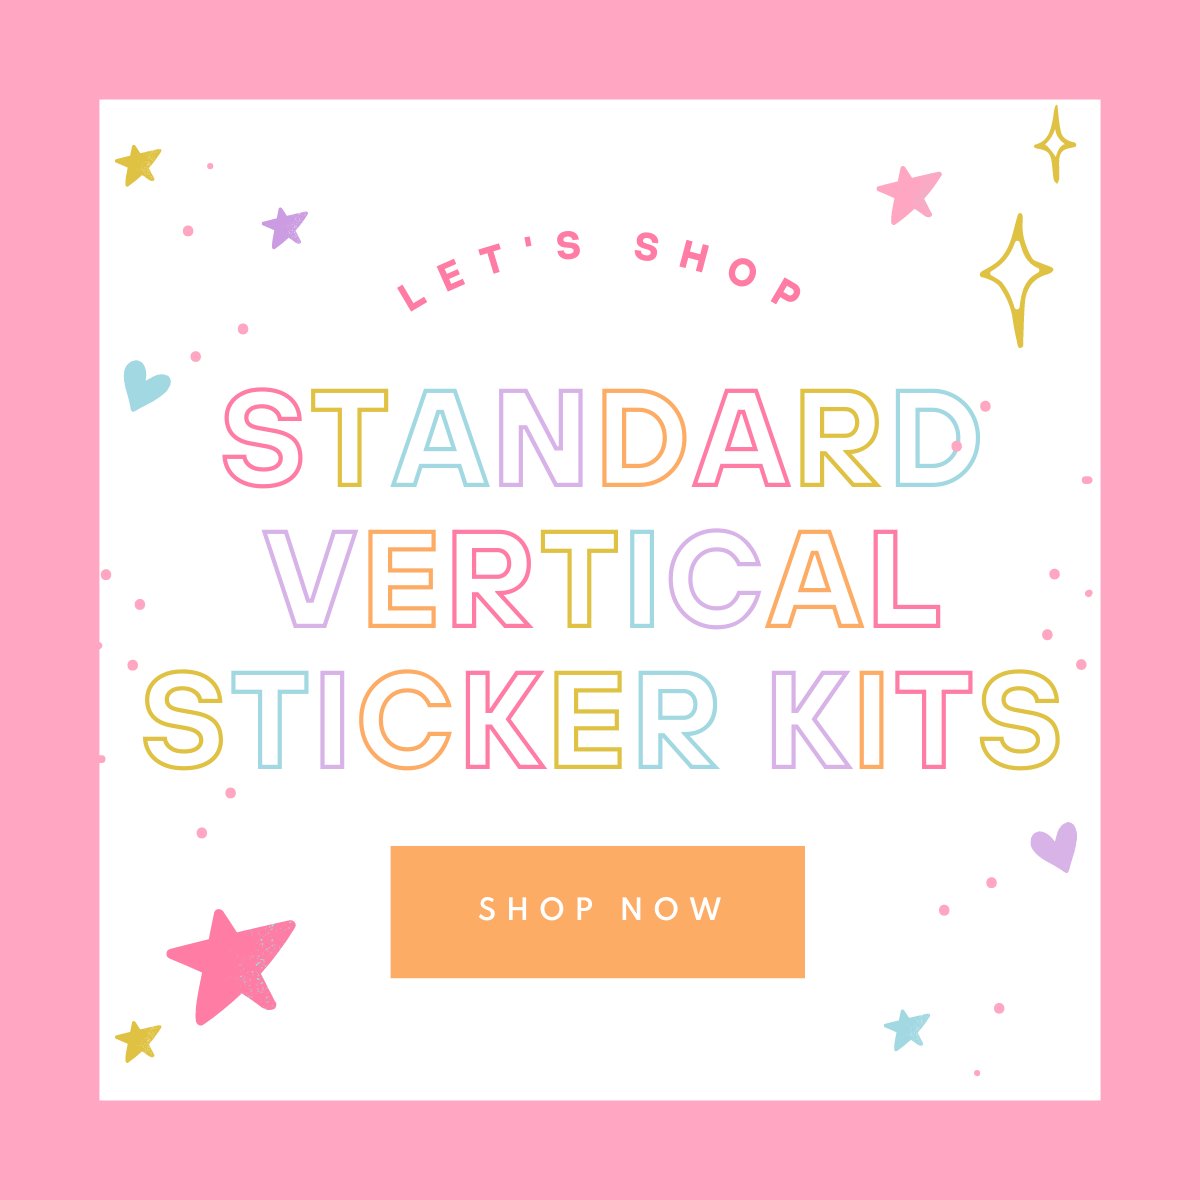 Standard Vertical Sticker Kits